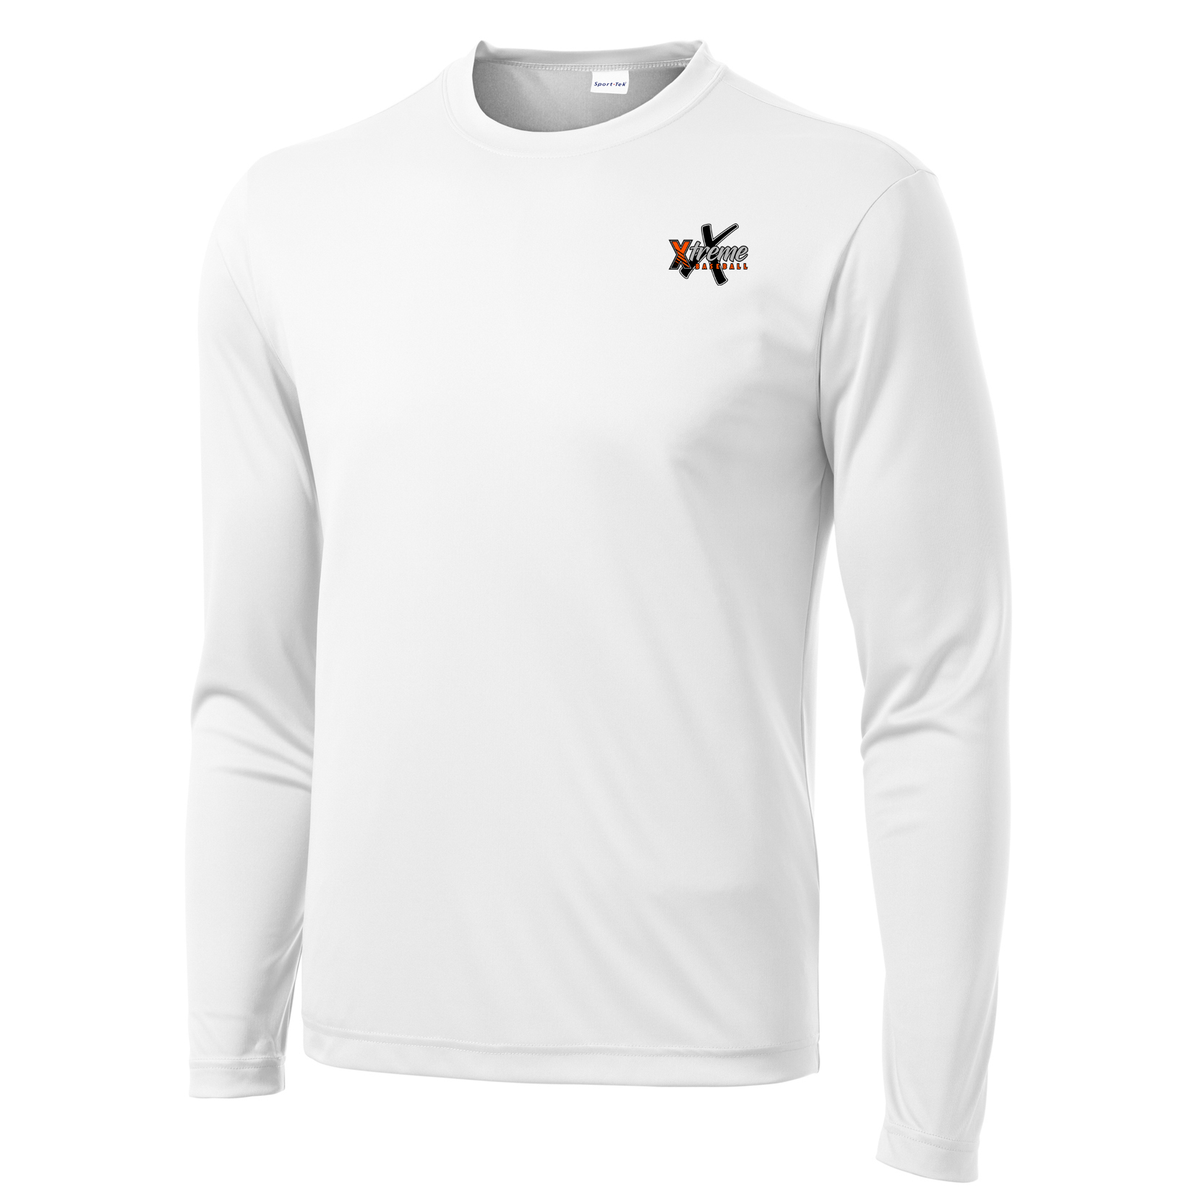 Xtreme Baseball Long Sleeve Performance Shirt